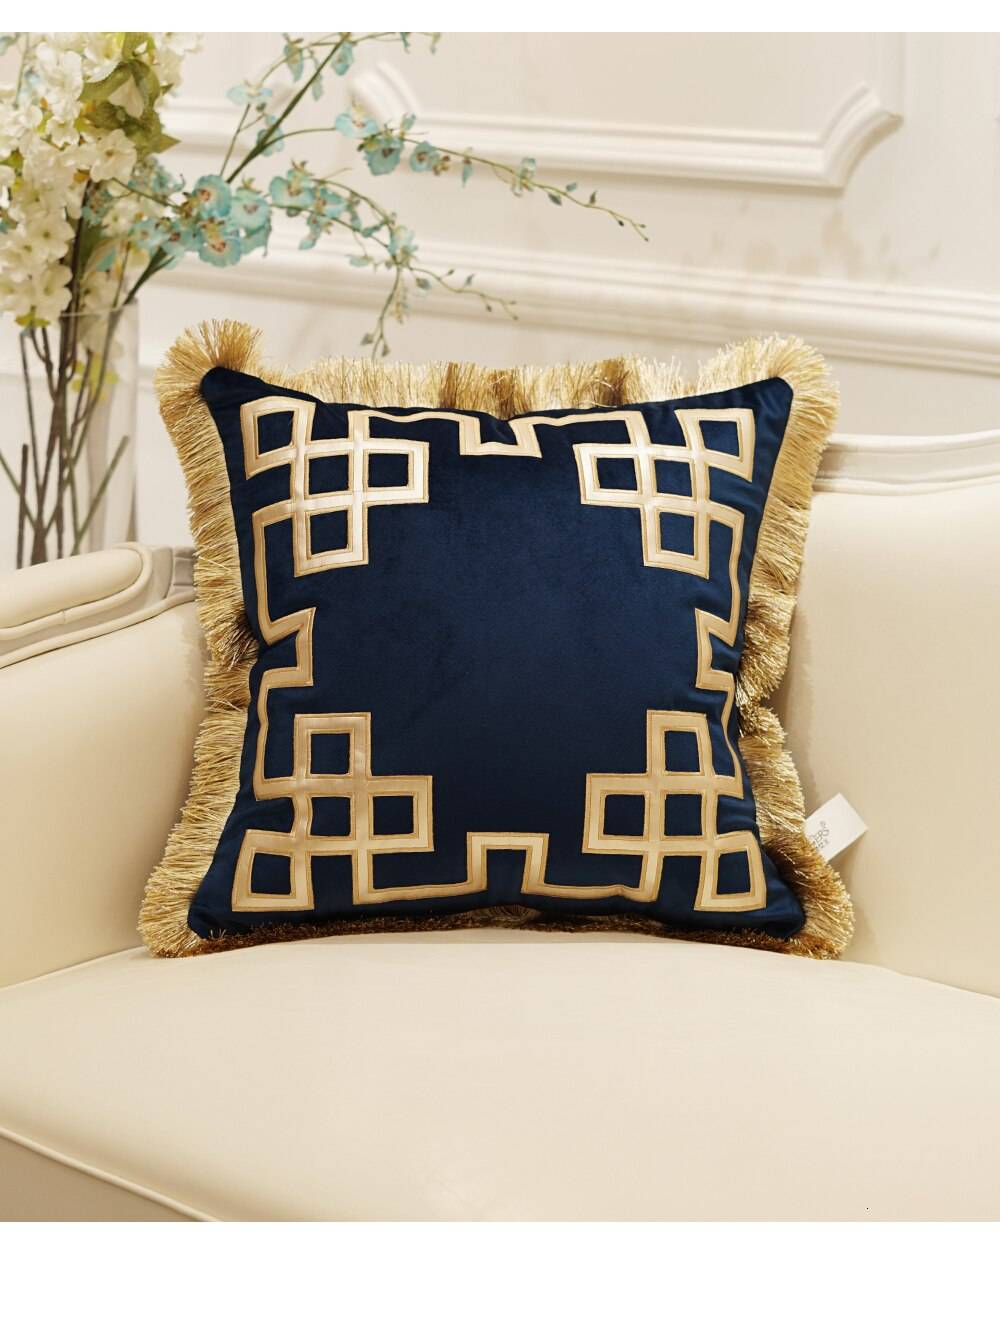 Luxury Embroidered Cushion Covers Velvet Tassels Pillow Case Home Decorative European Sofa Car Throw Pillows Blue Brown